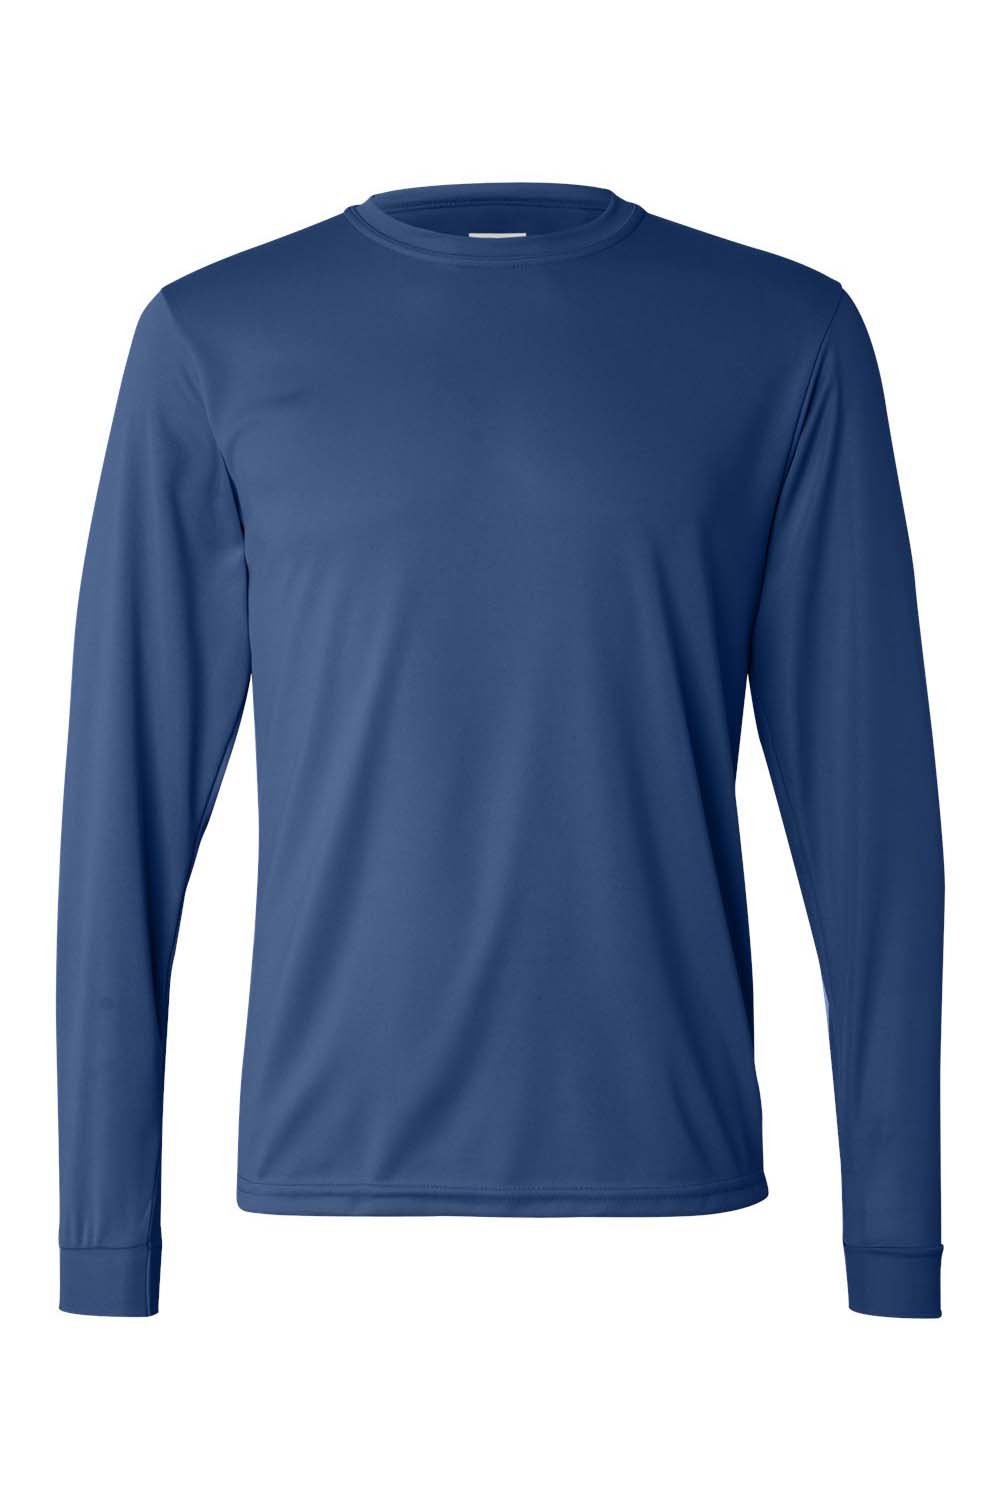 Augusta Sportswear 788 Mens Moisture Wicking Long Sleeve Crewneck T-Shirt Royal Blue Model Flat Front